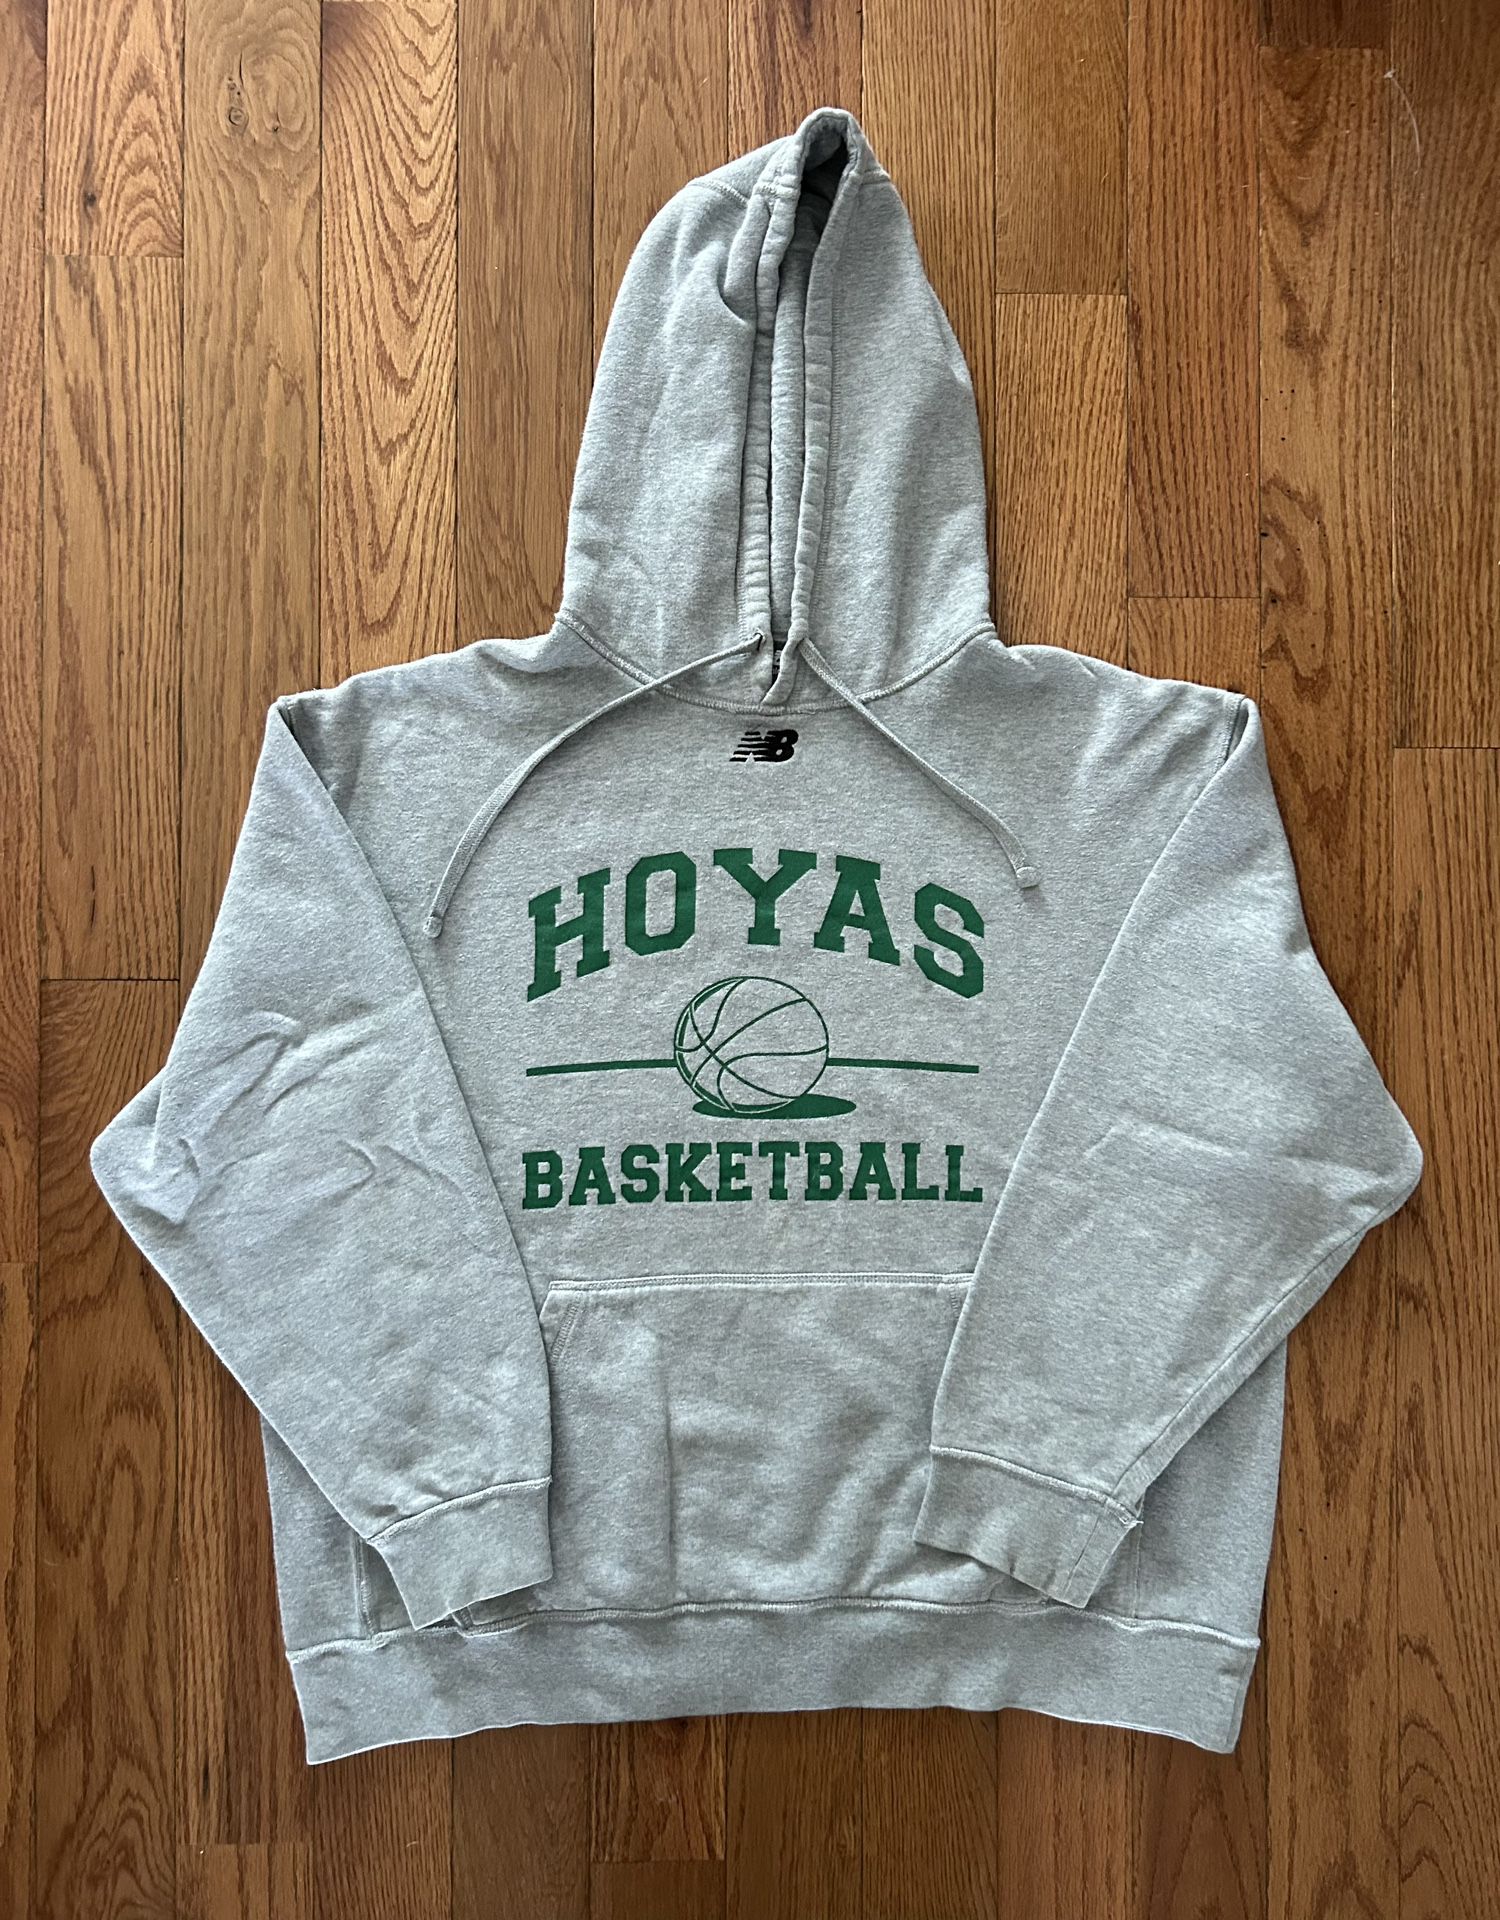 Hoyas Basketball New Balance Hoodie Size Medium